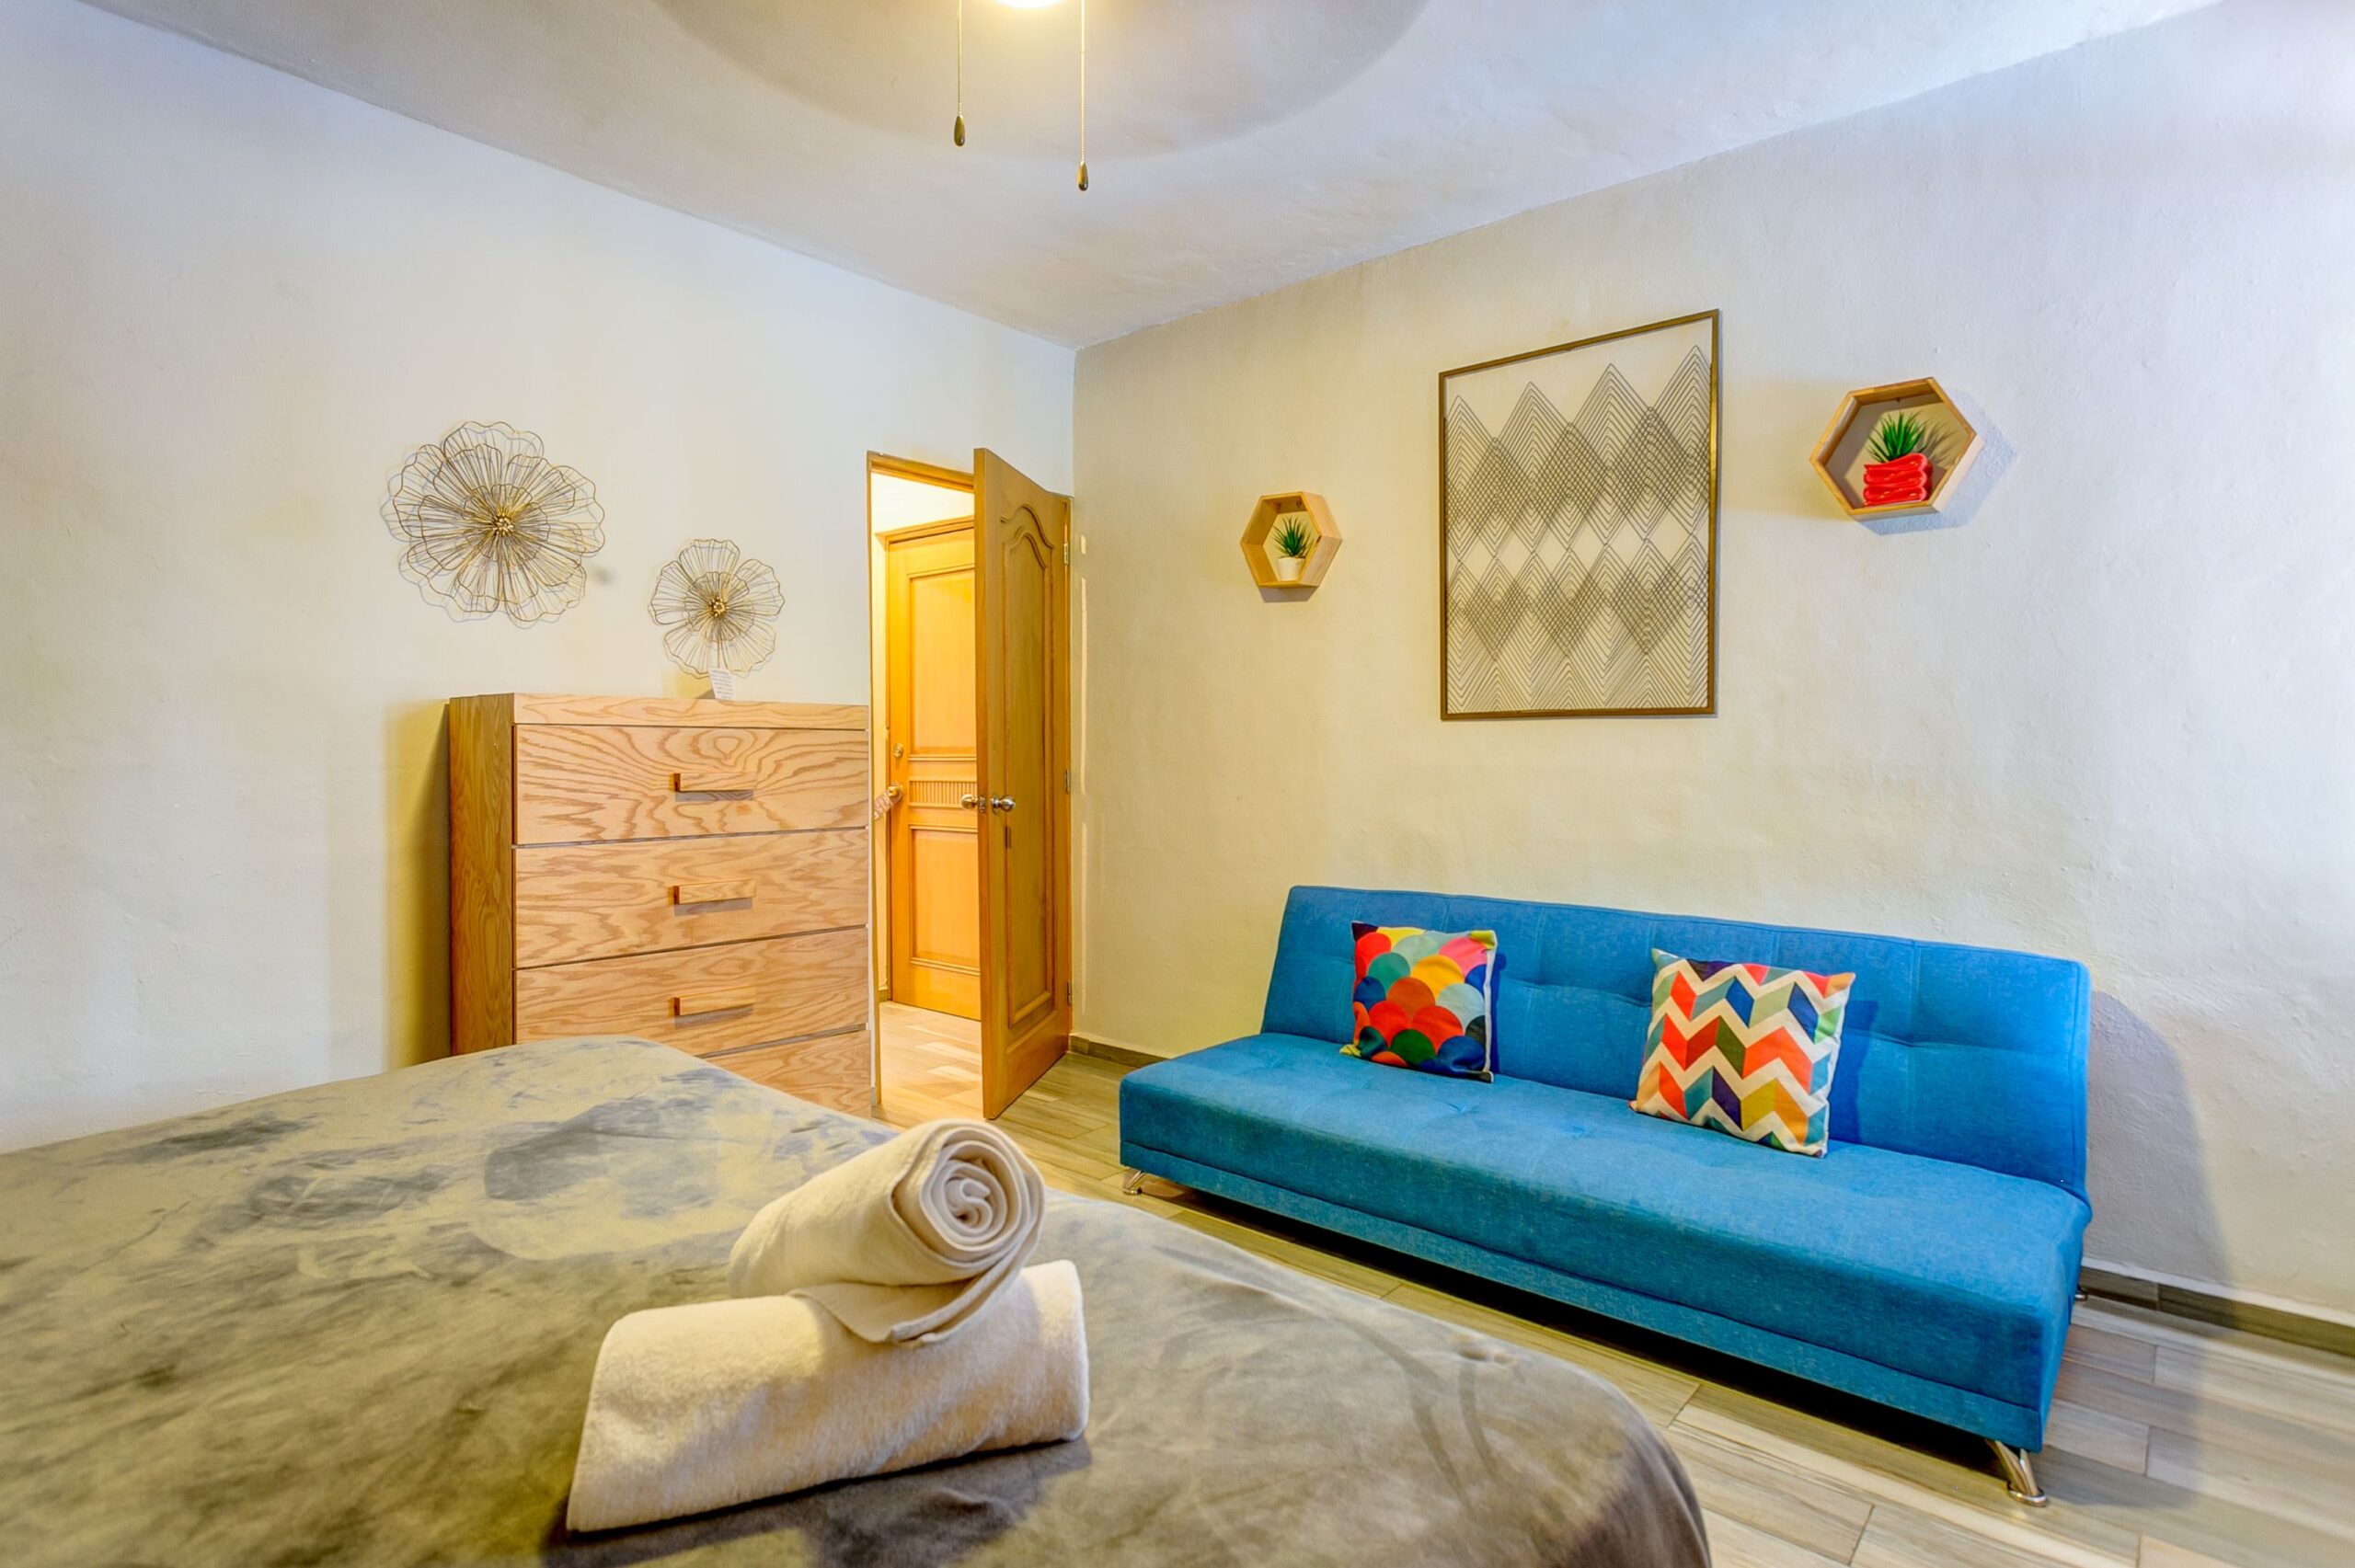 g apartments for sale in playa del carmen hacienda san josé sofa main unit bedroom